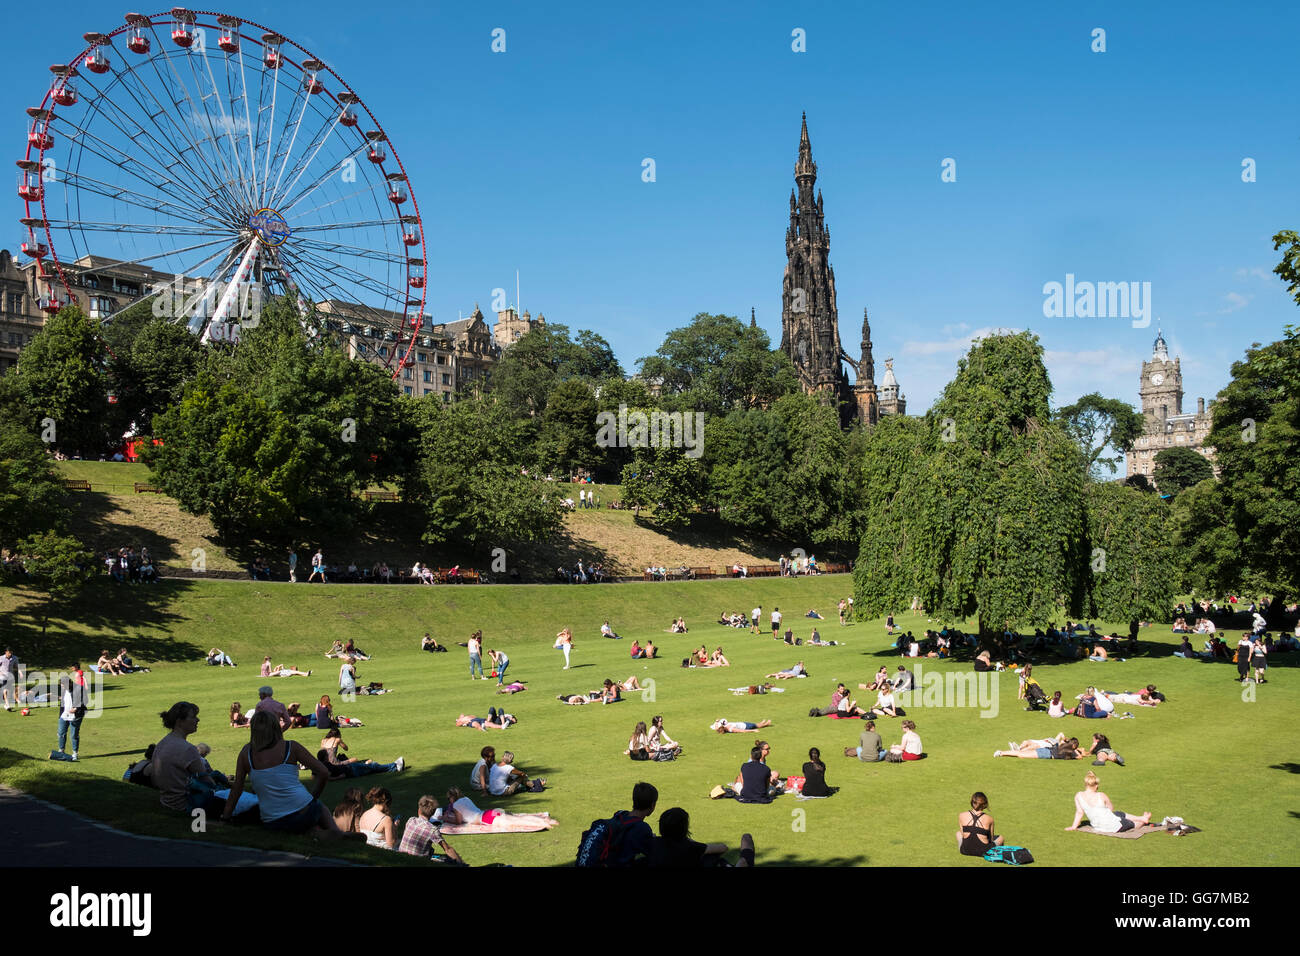 Summer hot weather brings many people into Princes Street Gardens in Edinburgh, Scotland, United Kingdom Stock Photo